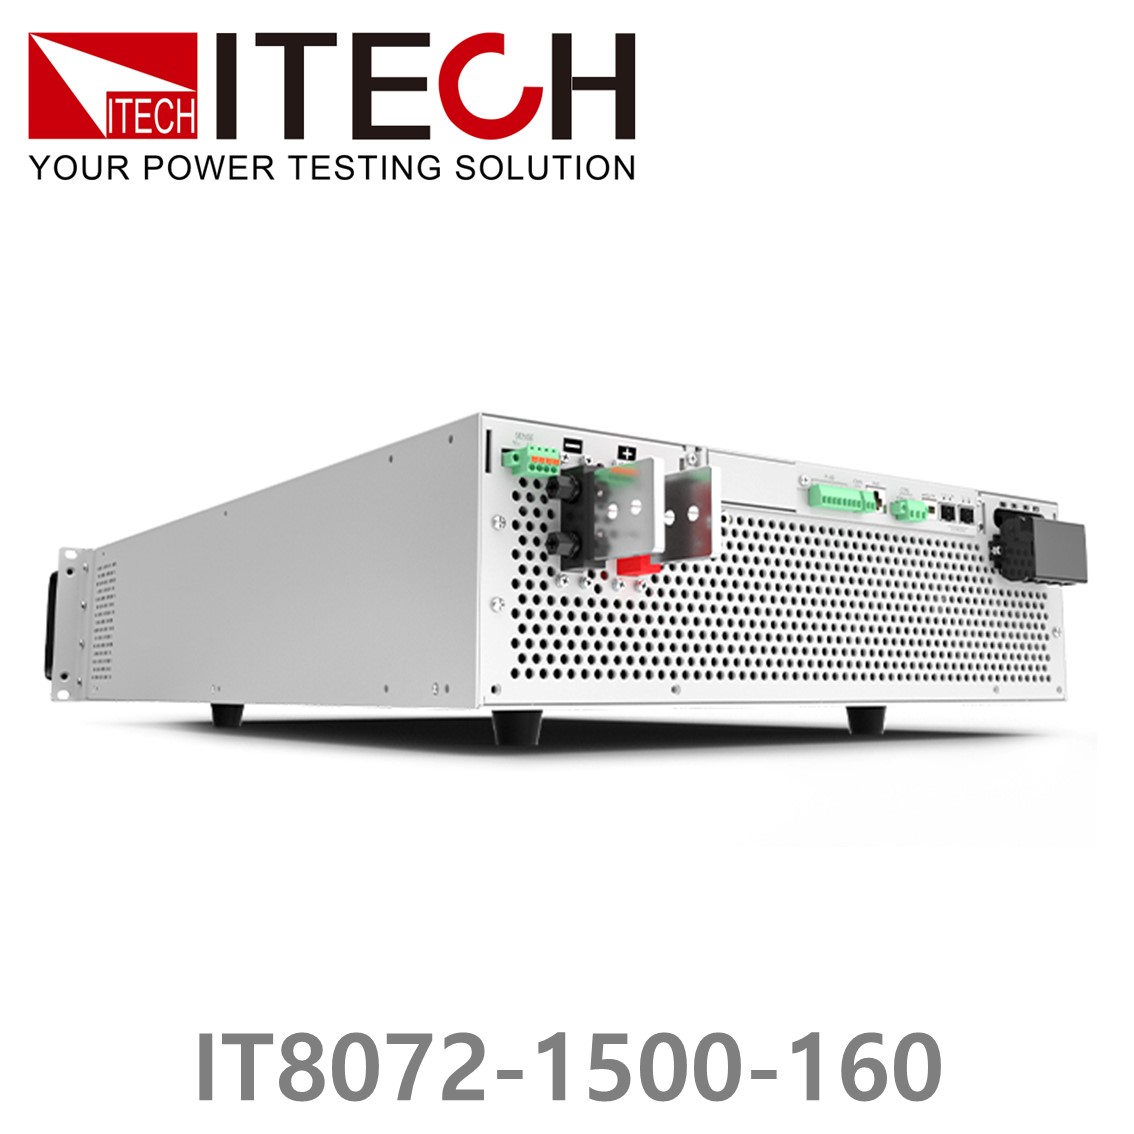 [ ITECH ] IT8054-1500-120  회생형 DC전자로드, DC전자부하 1500V/120A/54kW (15U)